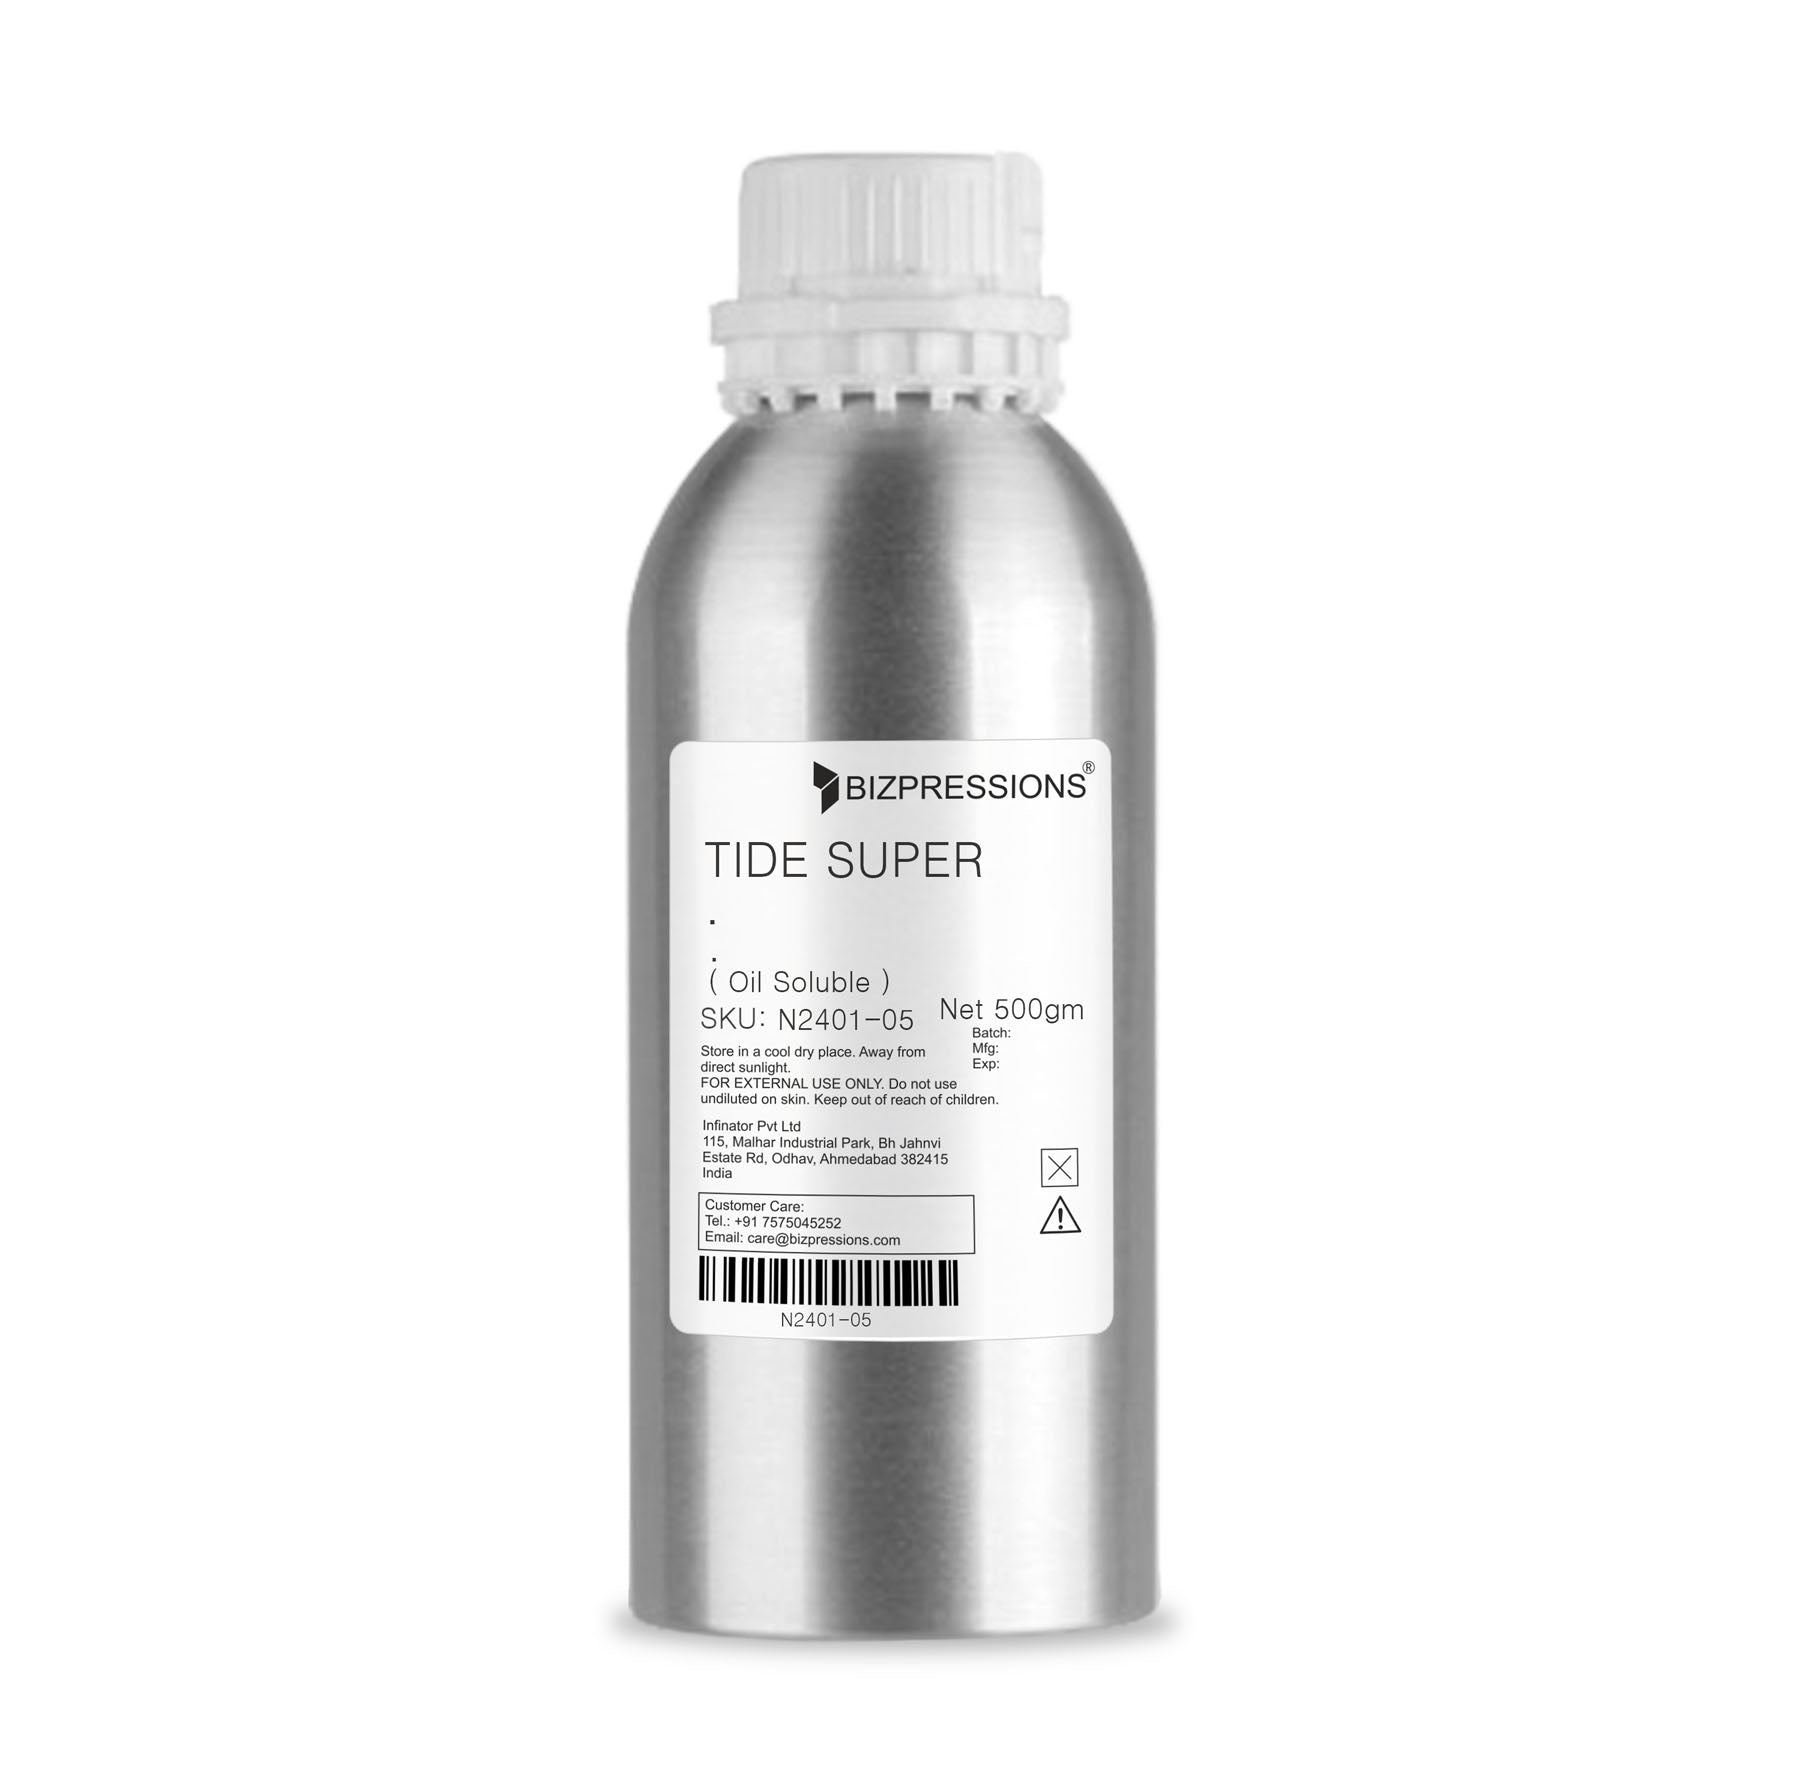 TIDE SUPER - Fragrance ( Oil Soluble ) - 500 gm